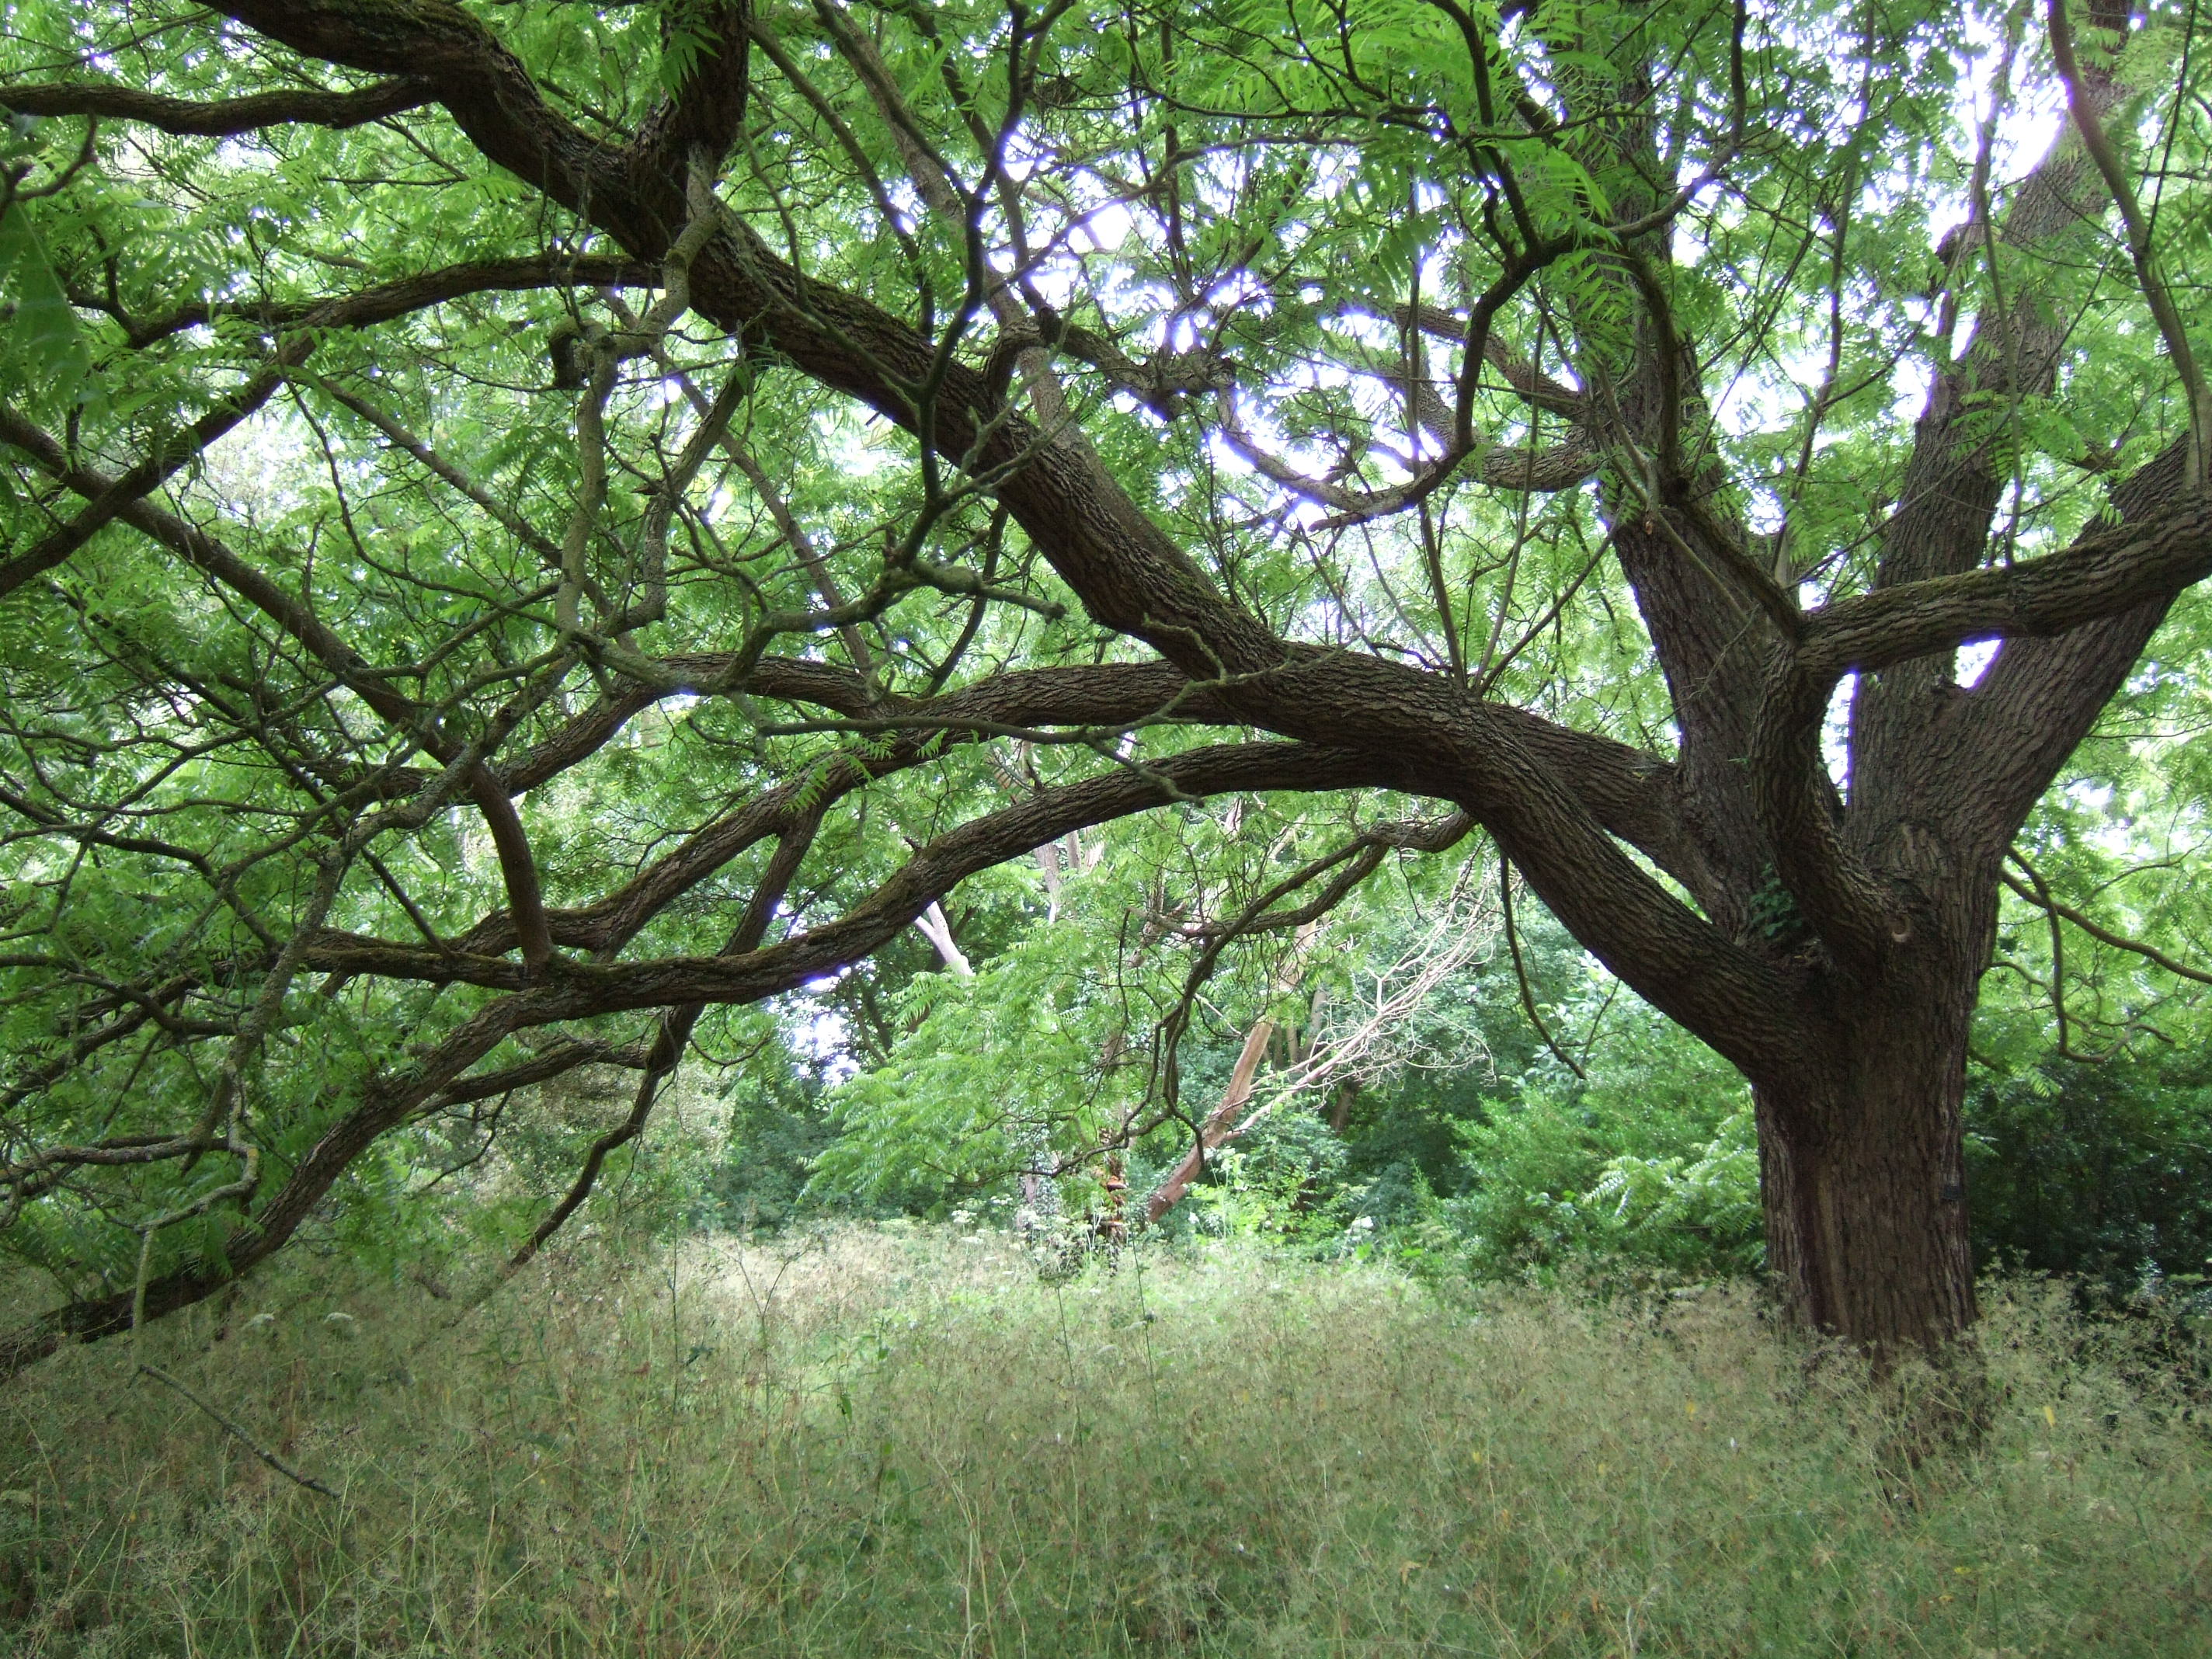 Cambridge University Botanic garden - Texan walnut, Juglans elaeopyren, and meadow